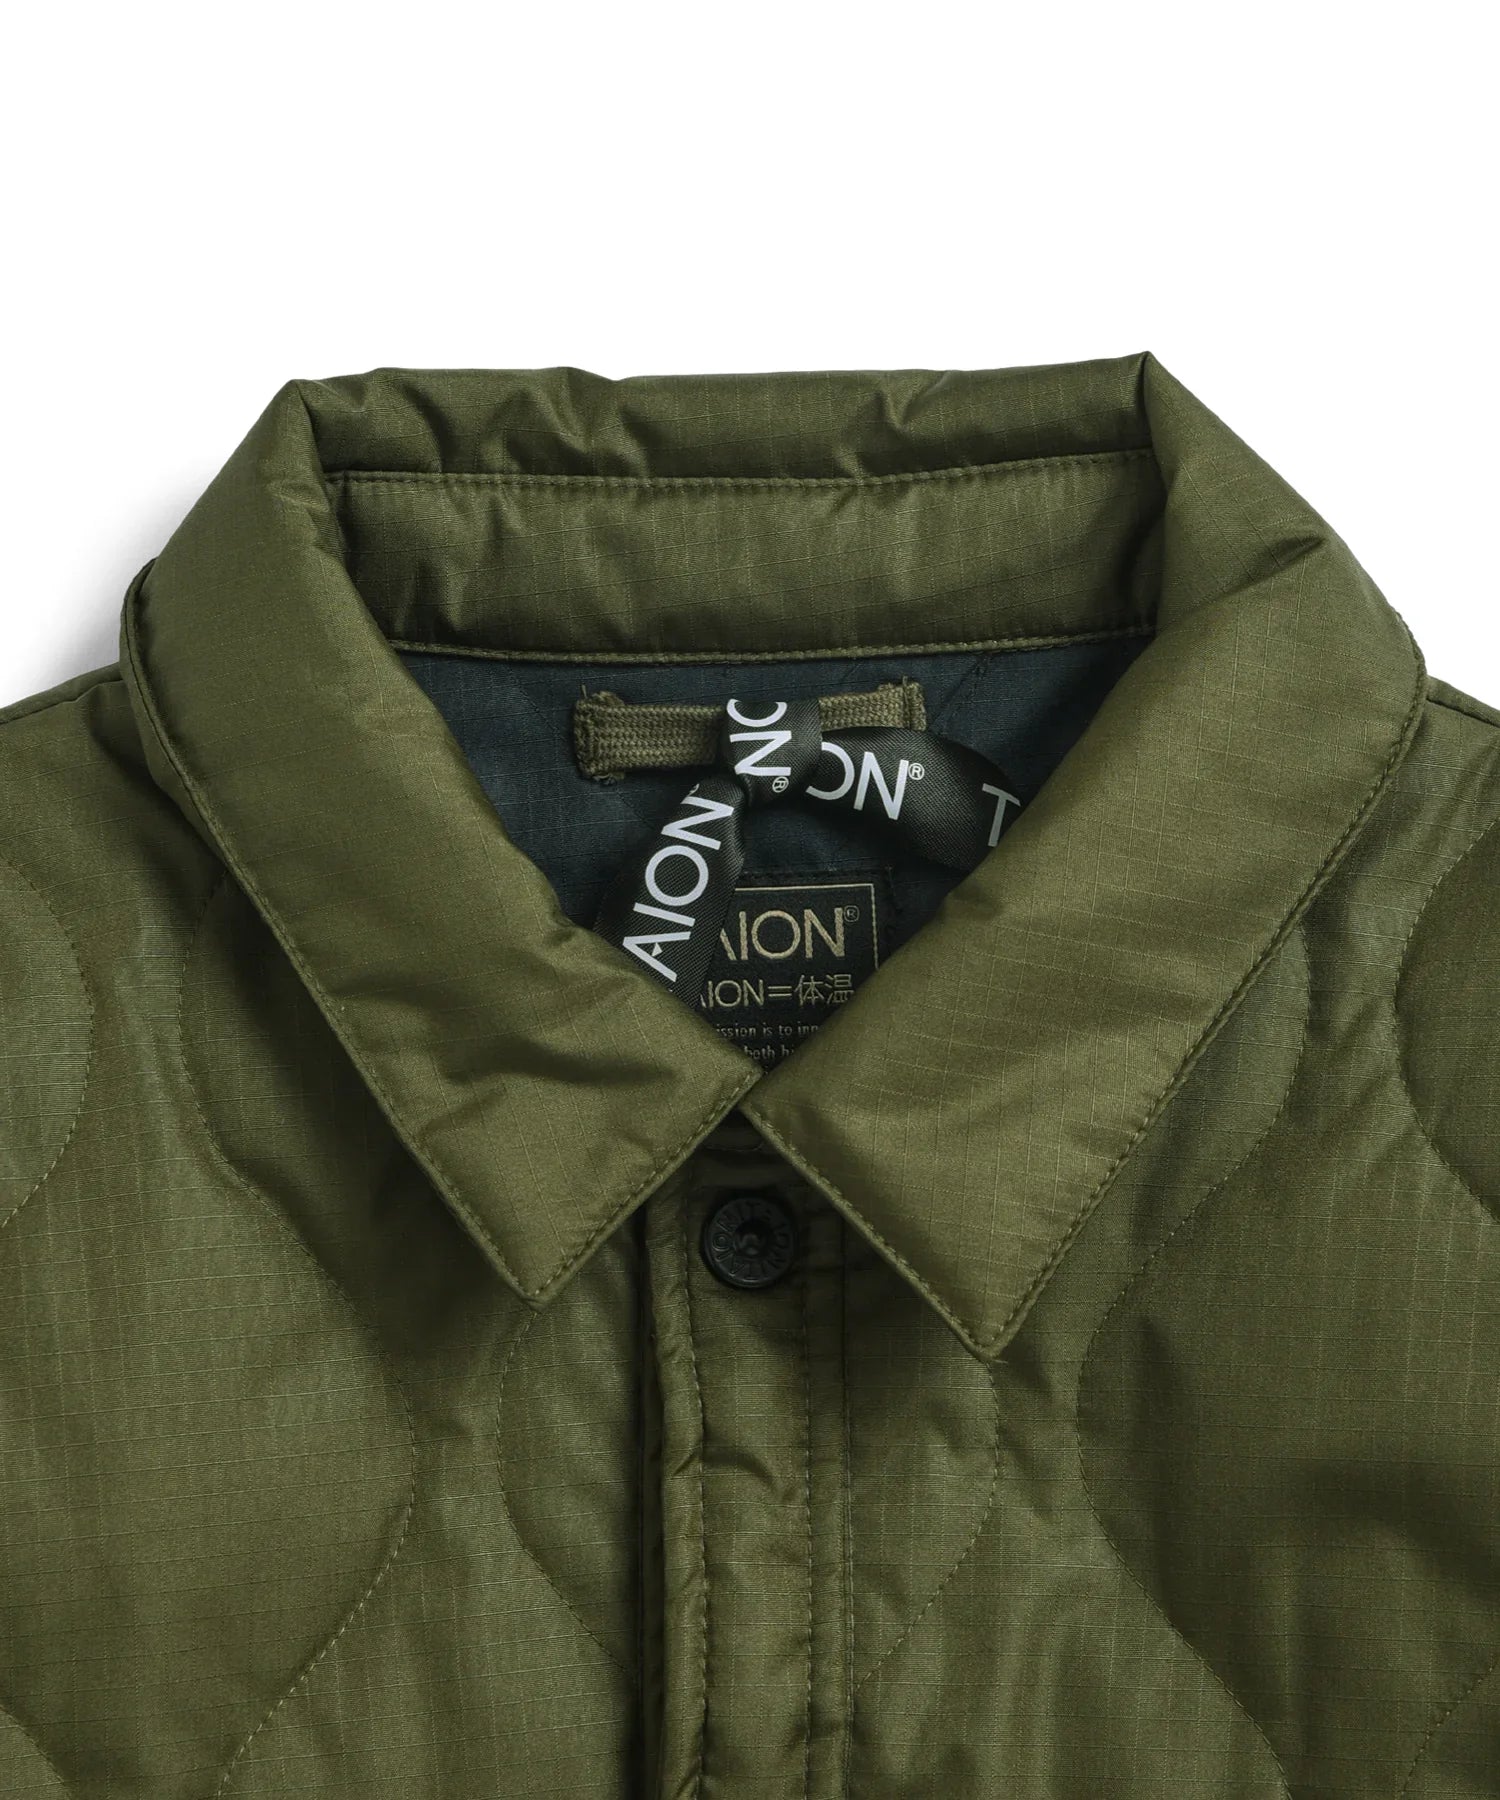 Taion Military Shirt Jacket - Dark Sage